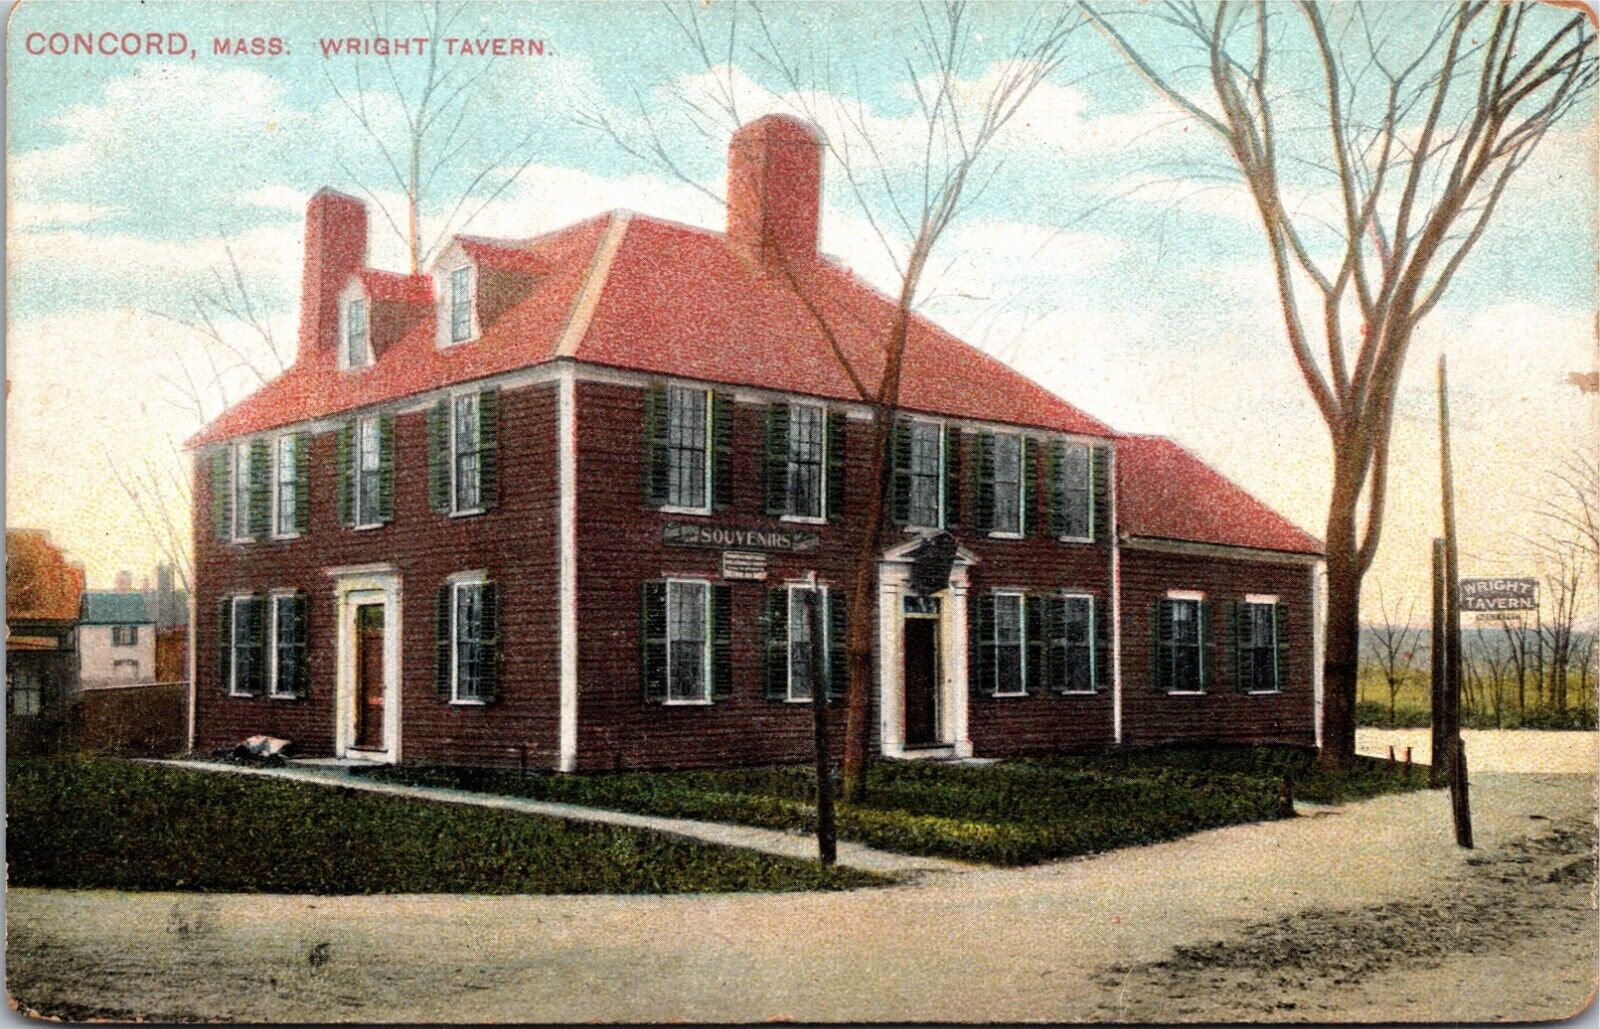 Concord MA Wright Tavern 1910's Vintage Massachusetts Postcard